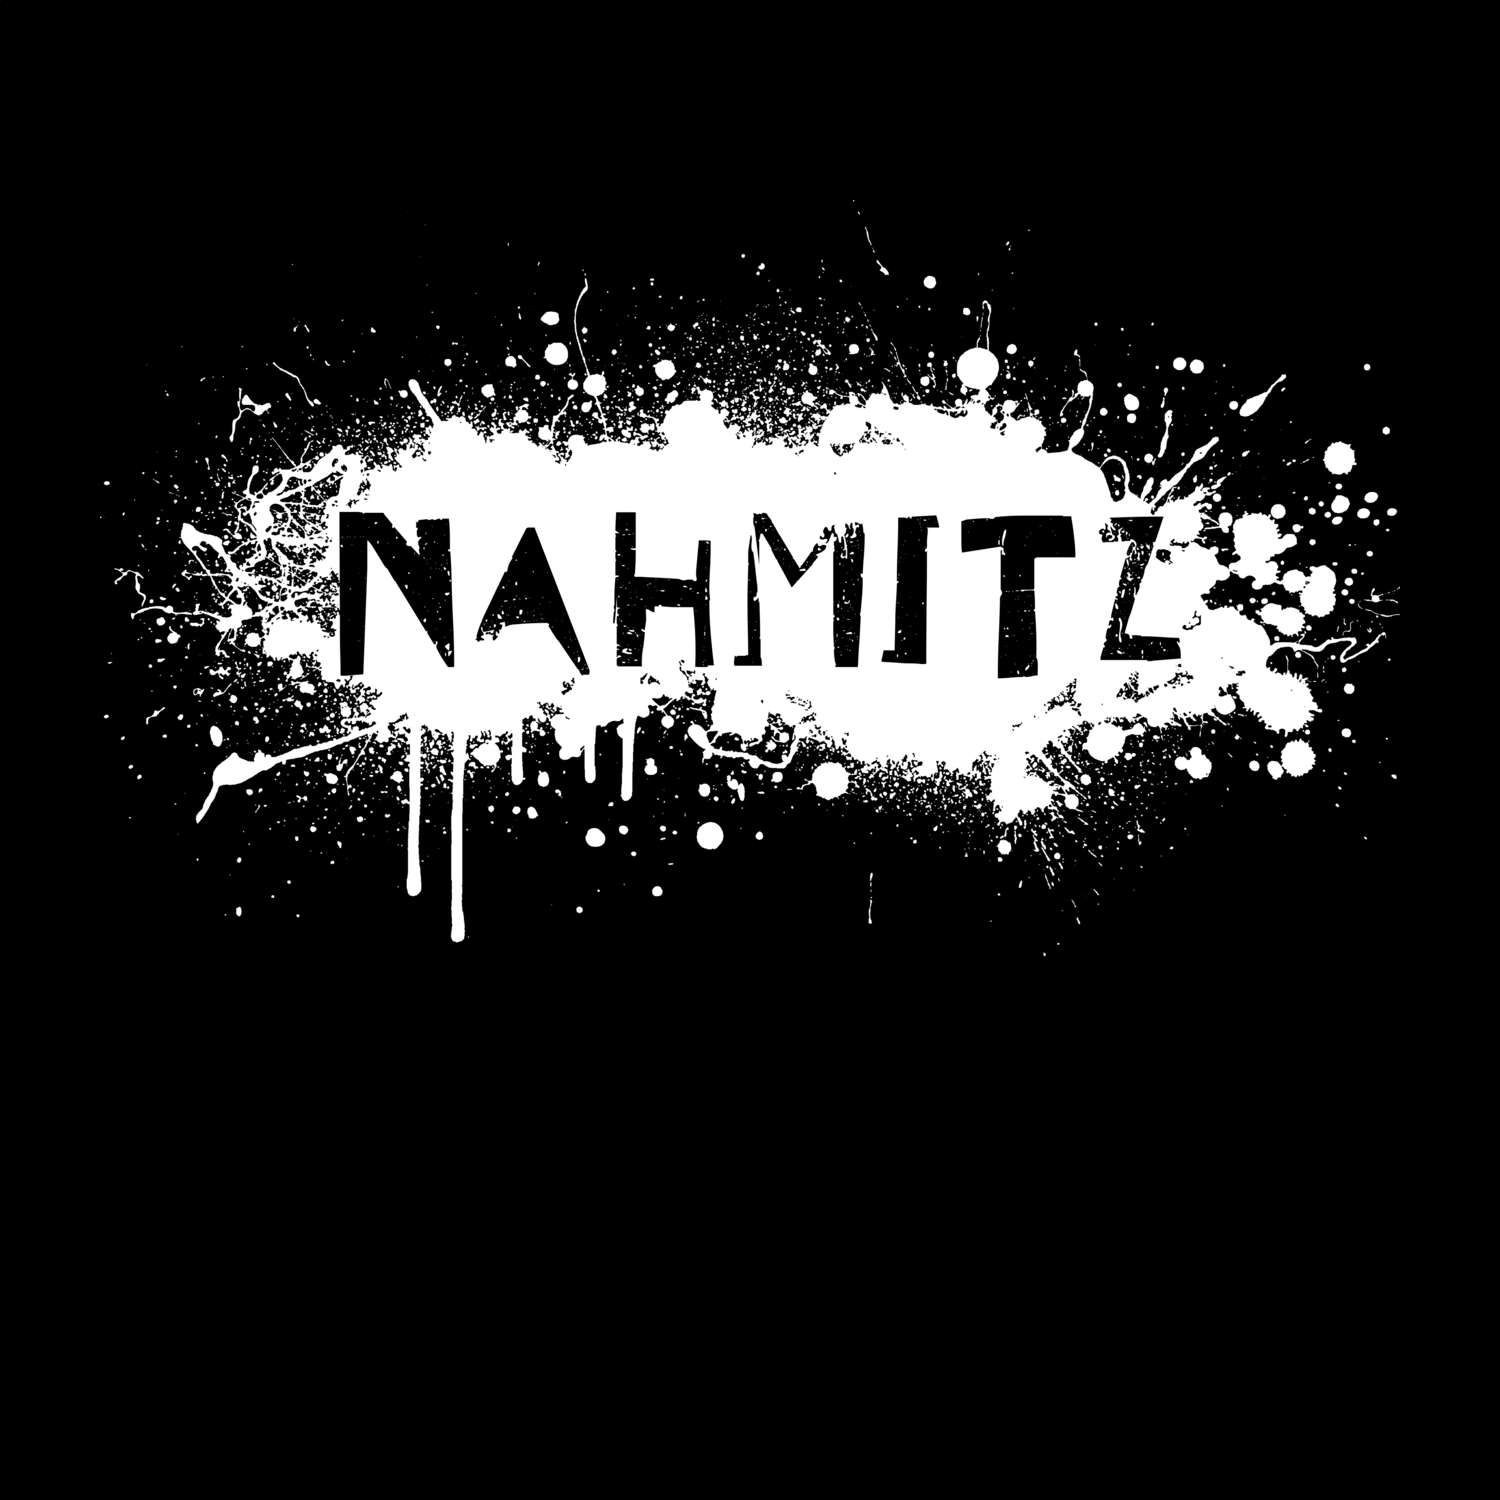 Nahmitz T-Shirt »Paint Splash Punk«